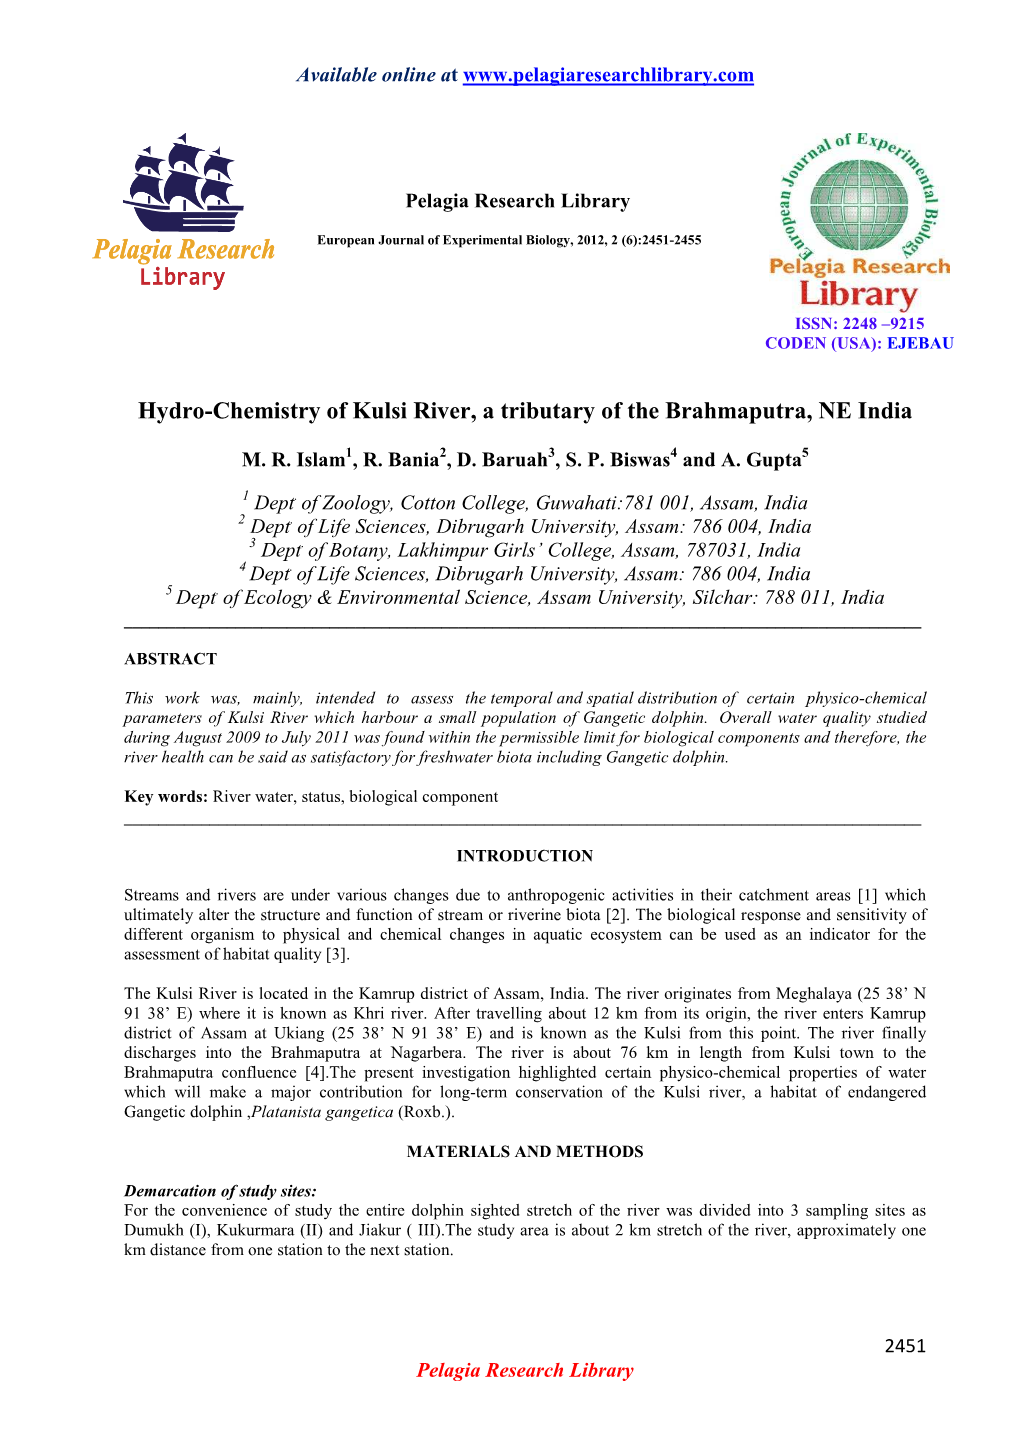 Hydro-Chemistry of Kulsi River, a Tributary of the Brahmaputra, NE India